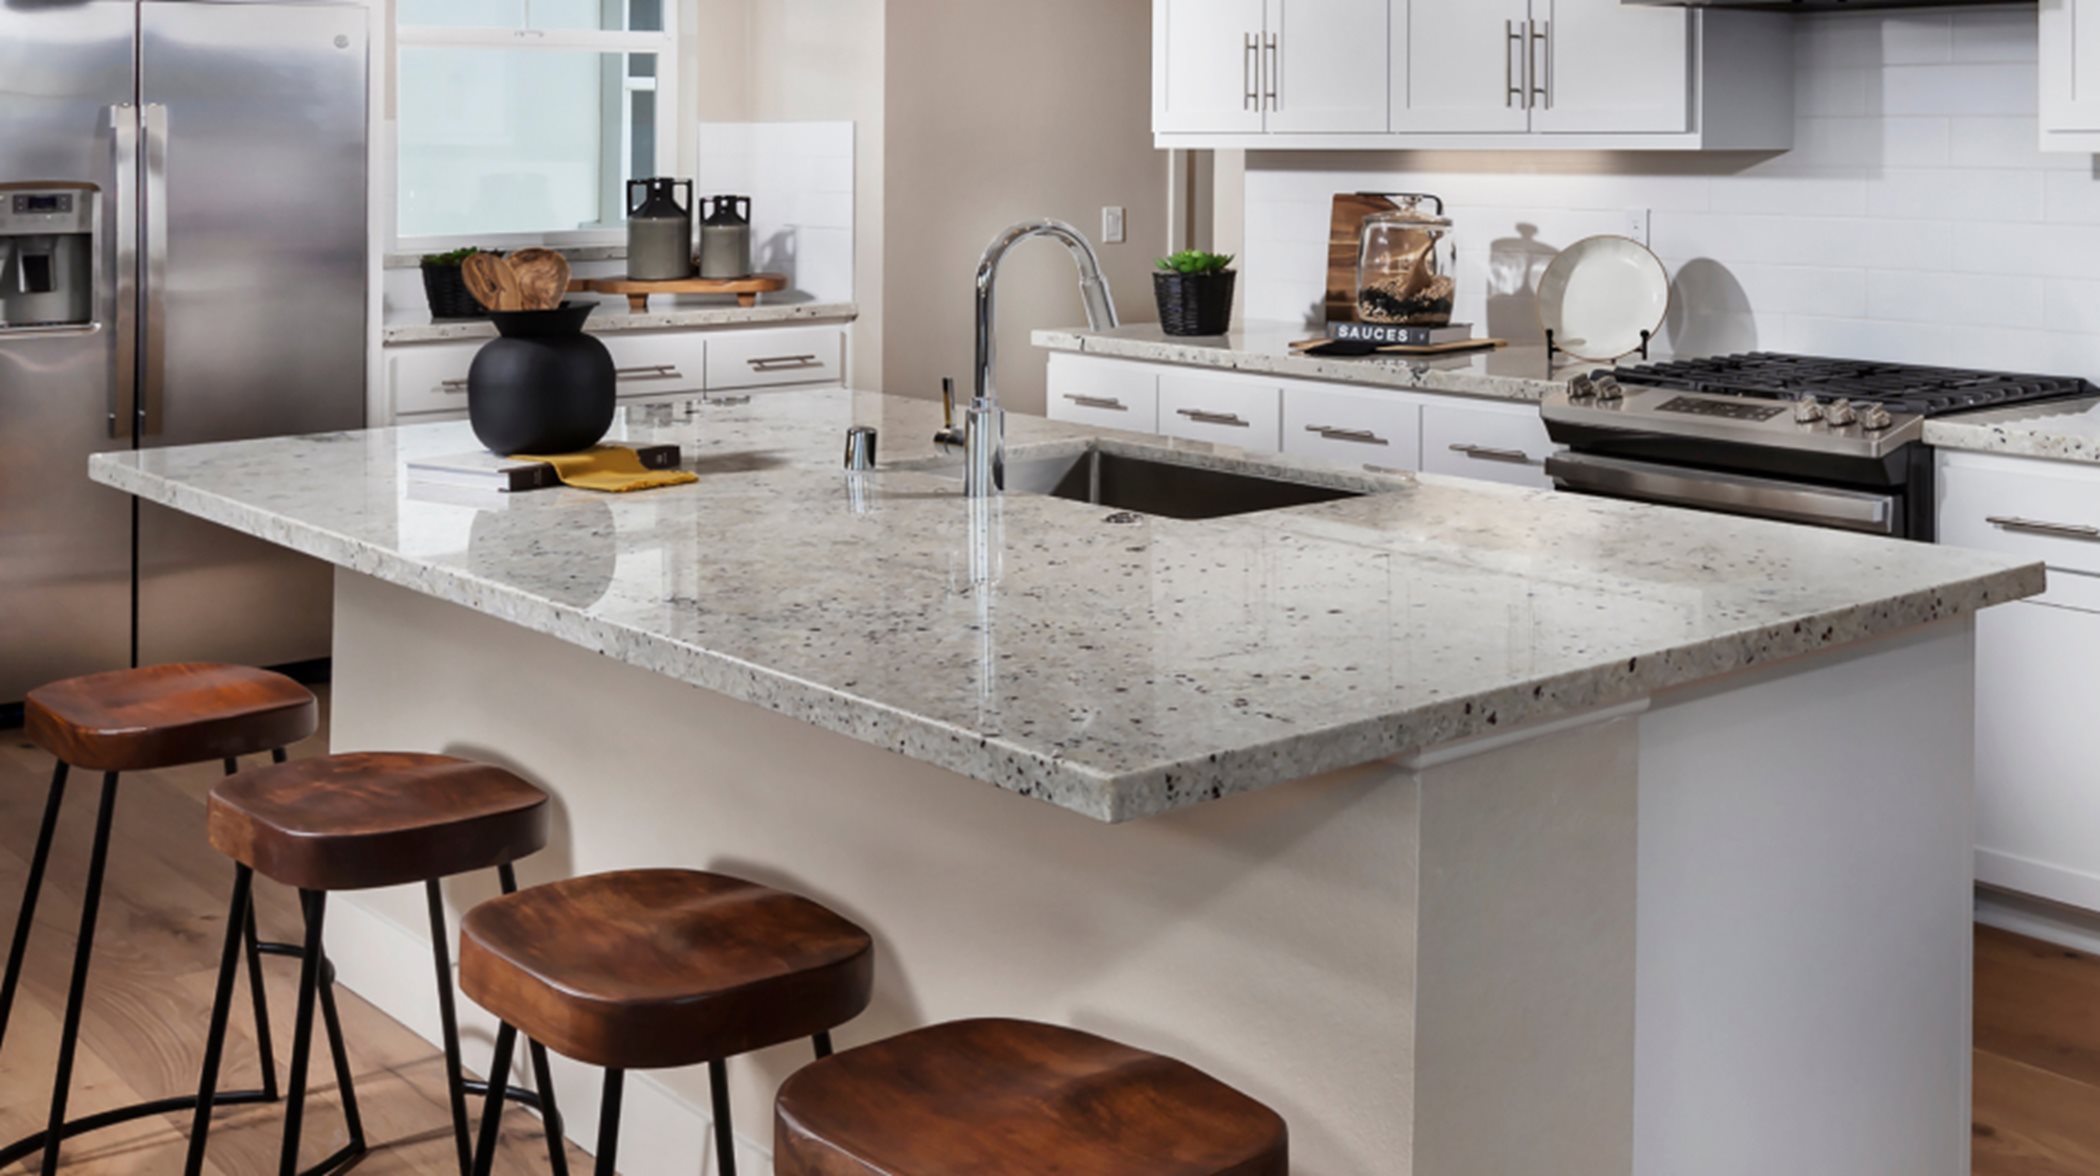 Bungalows granite countertop in entire kitchen